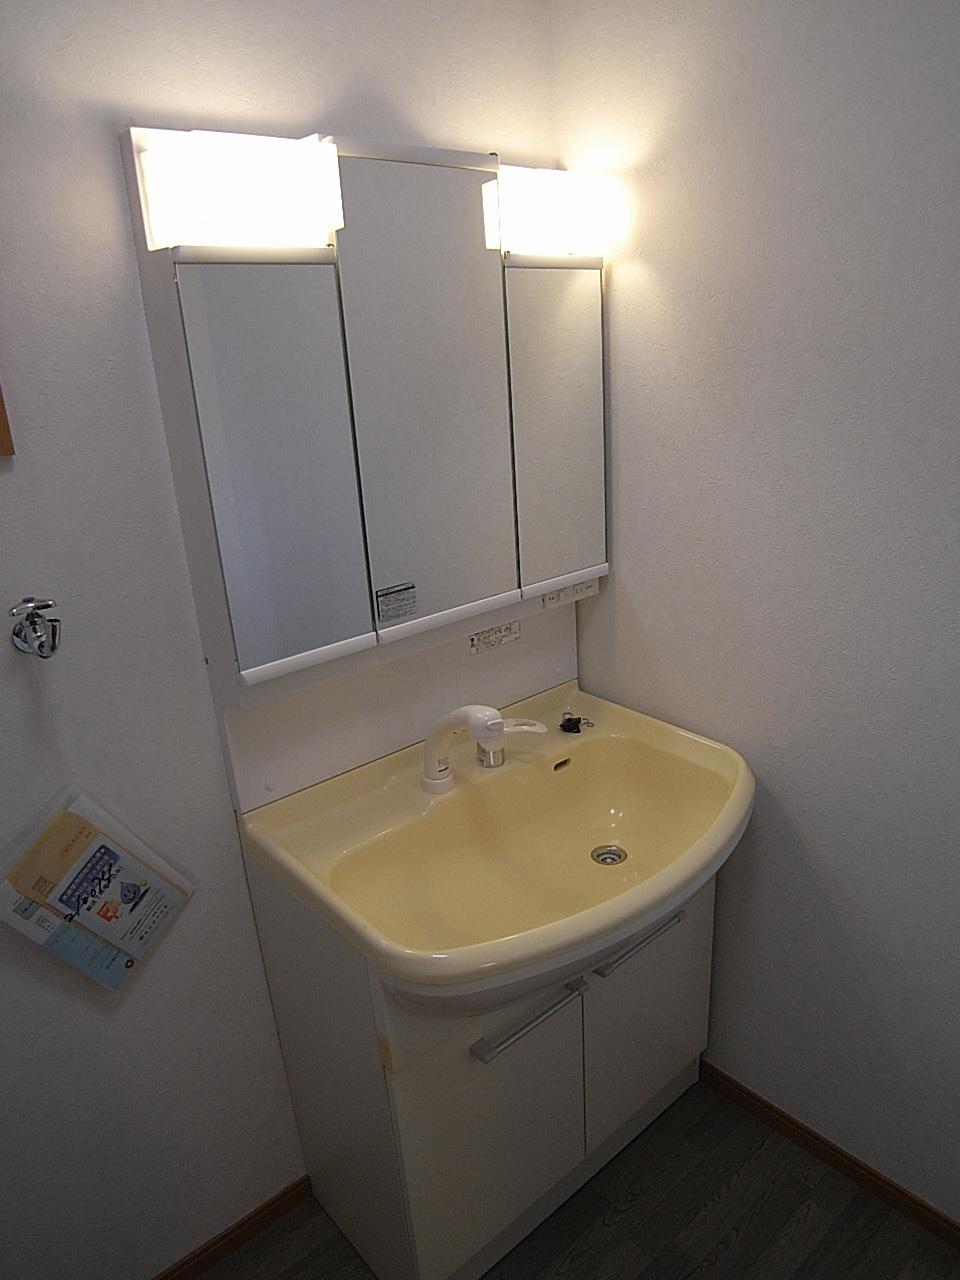 Wash basin, toilet. Shower